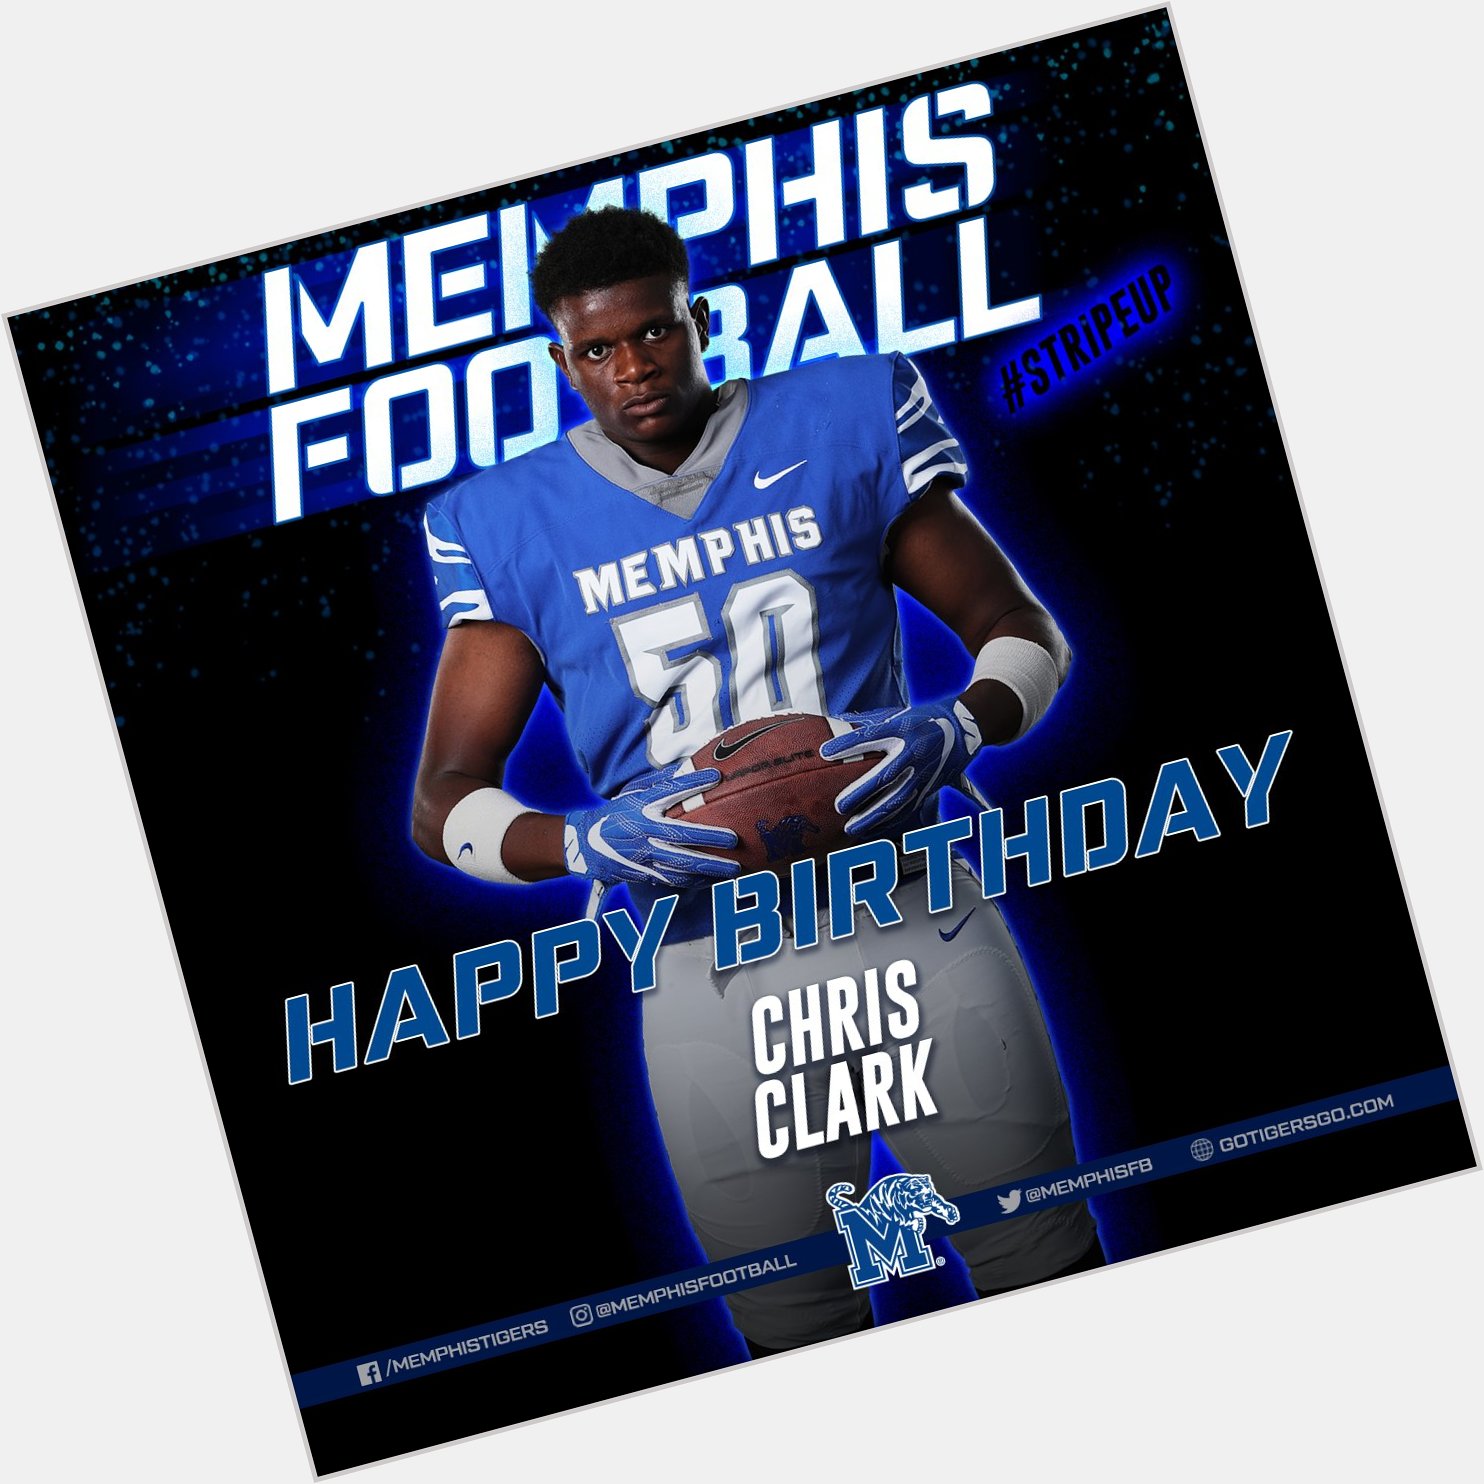 Happy birthday to defensive lineman Chris Clark! 